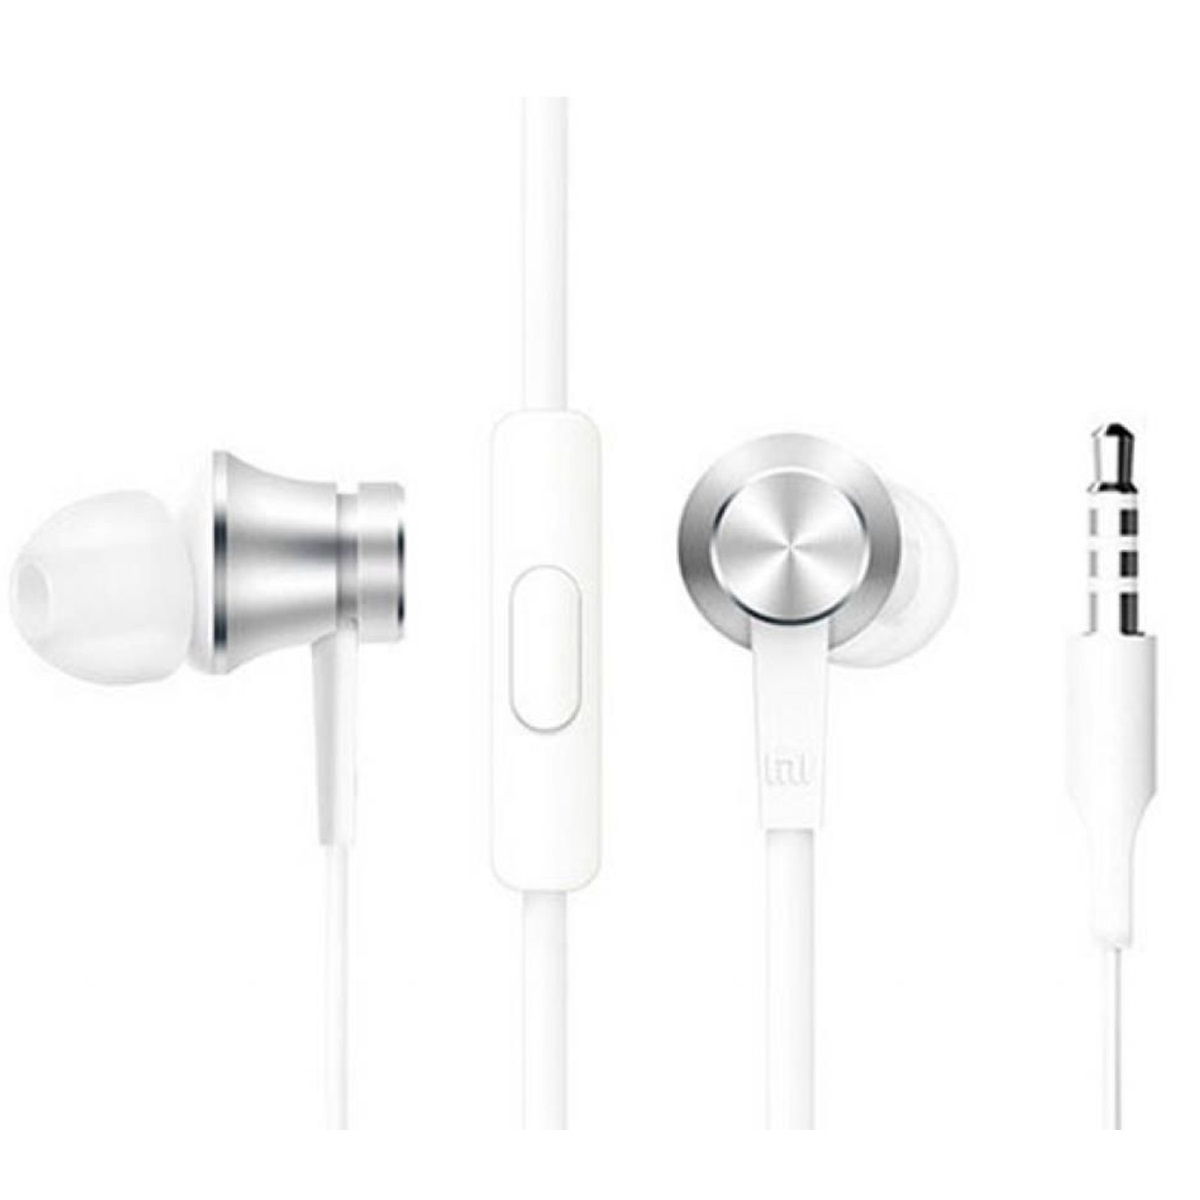 Xiaomi Mi In-Ear Basic Silver Auriculares Intrauditivos Blanco